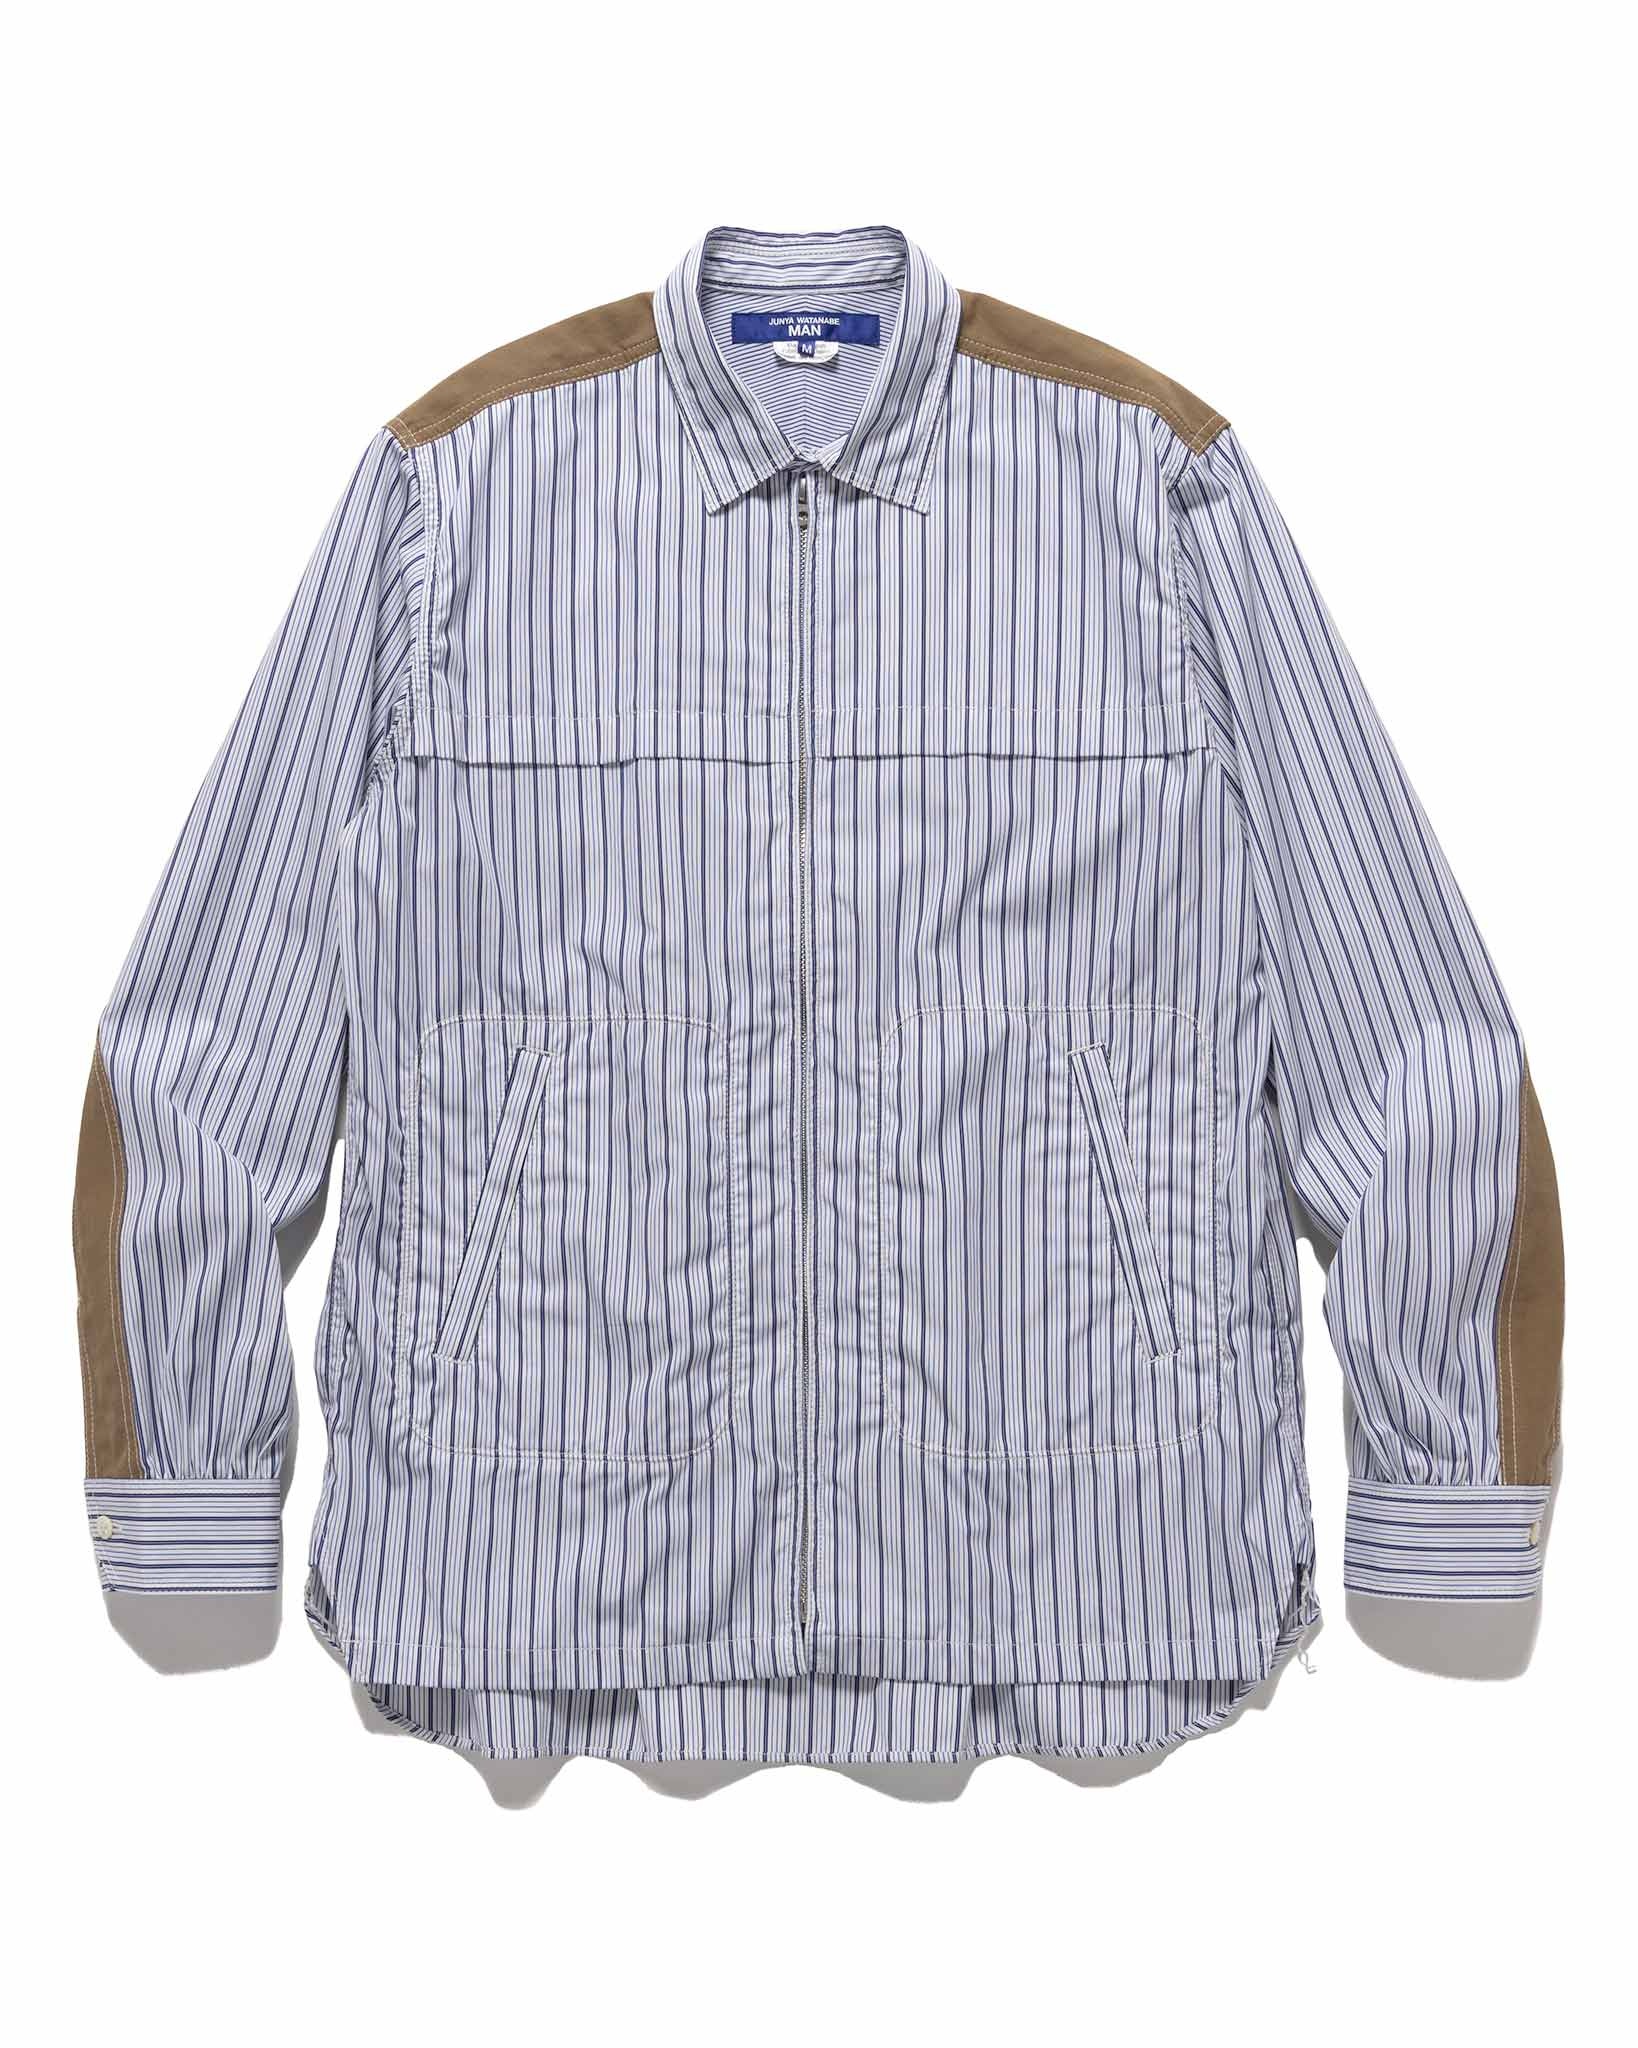 Men's Cotton Stripe Shirt White/Navy - 1